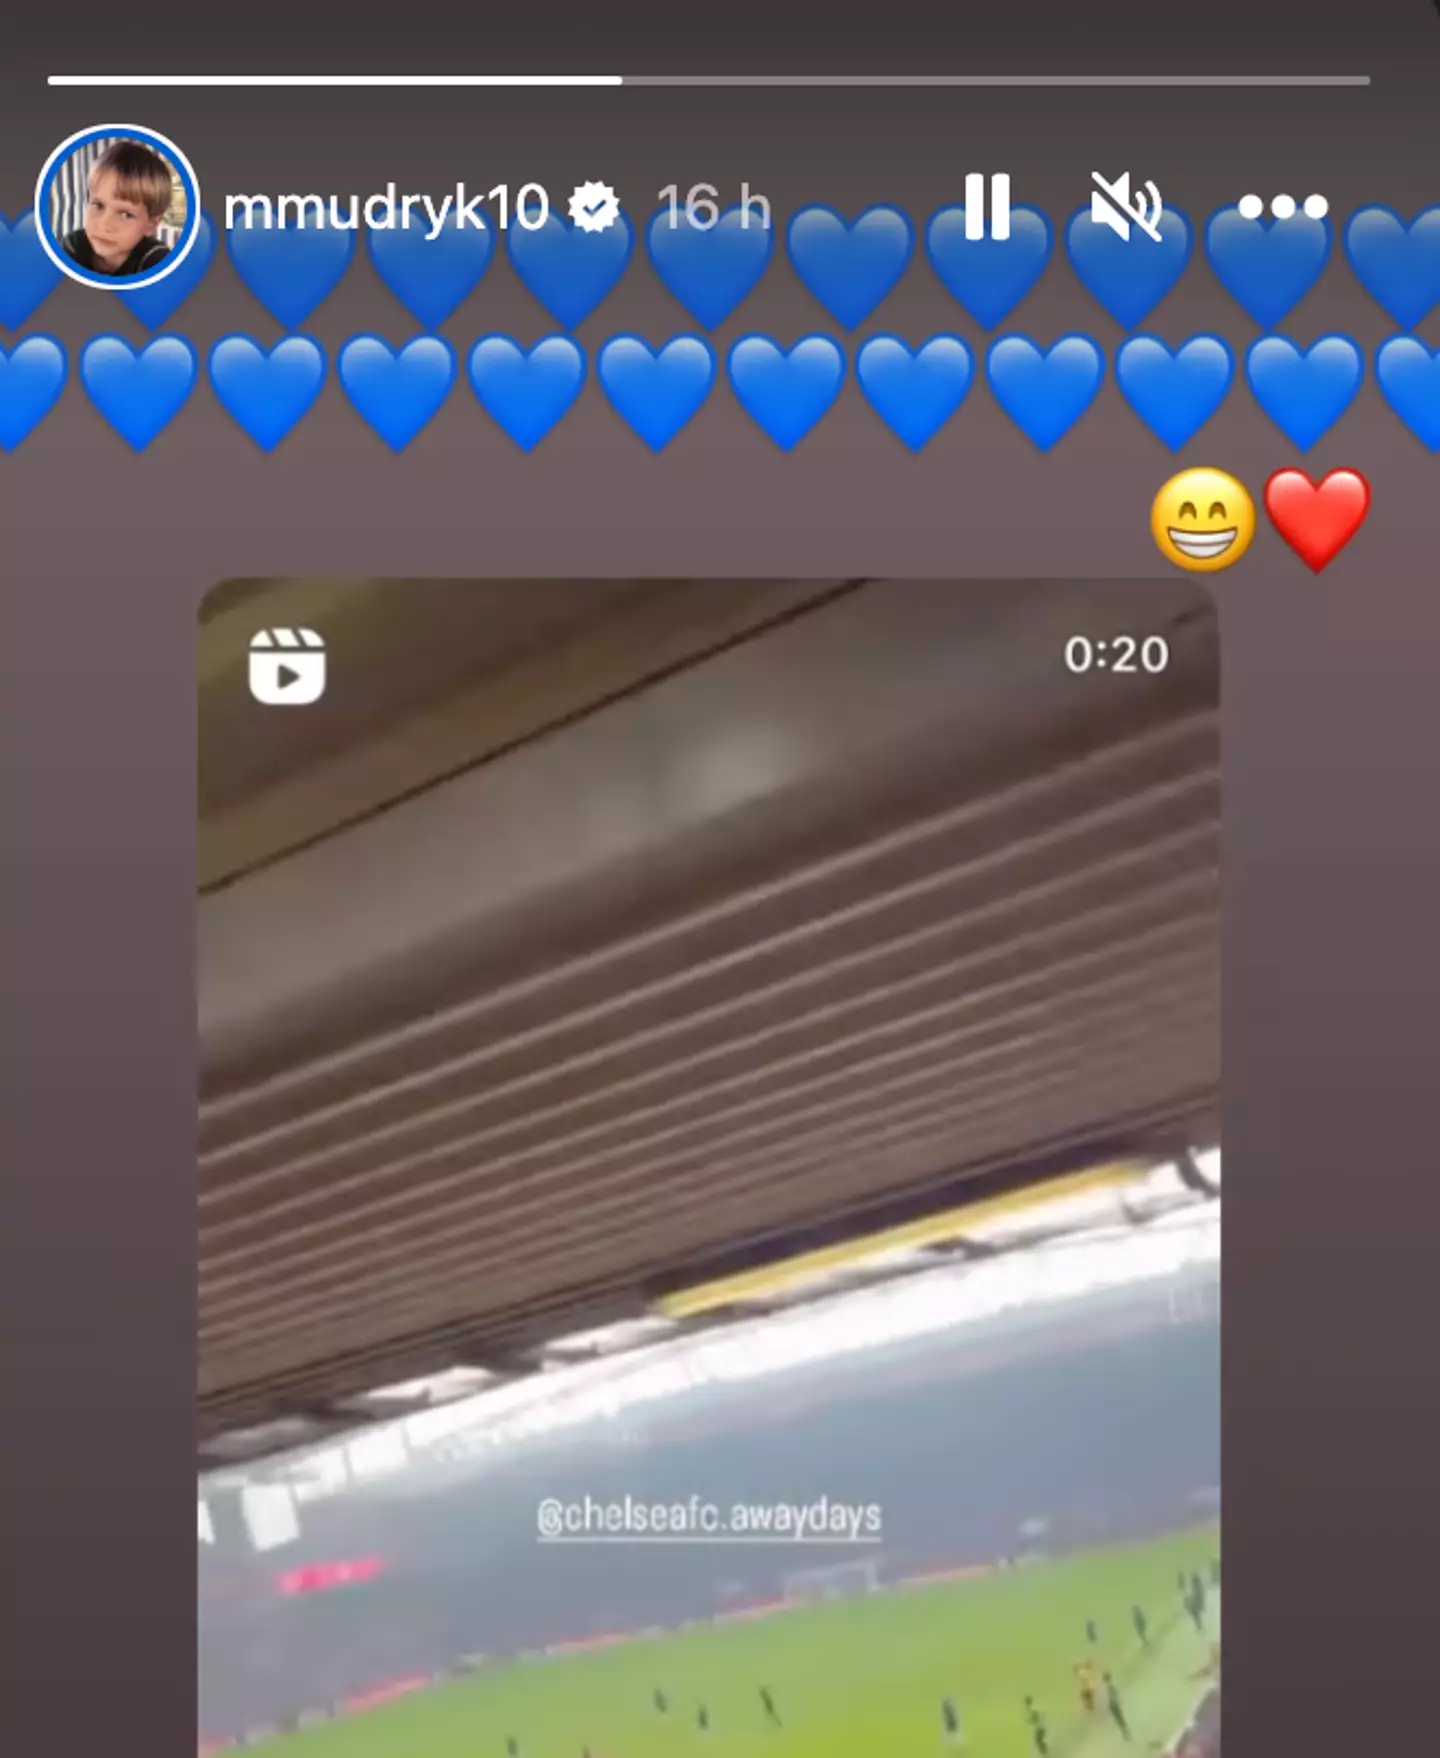 Mudryk shared the video on social media. Image: Instagram